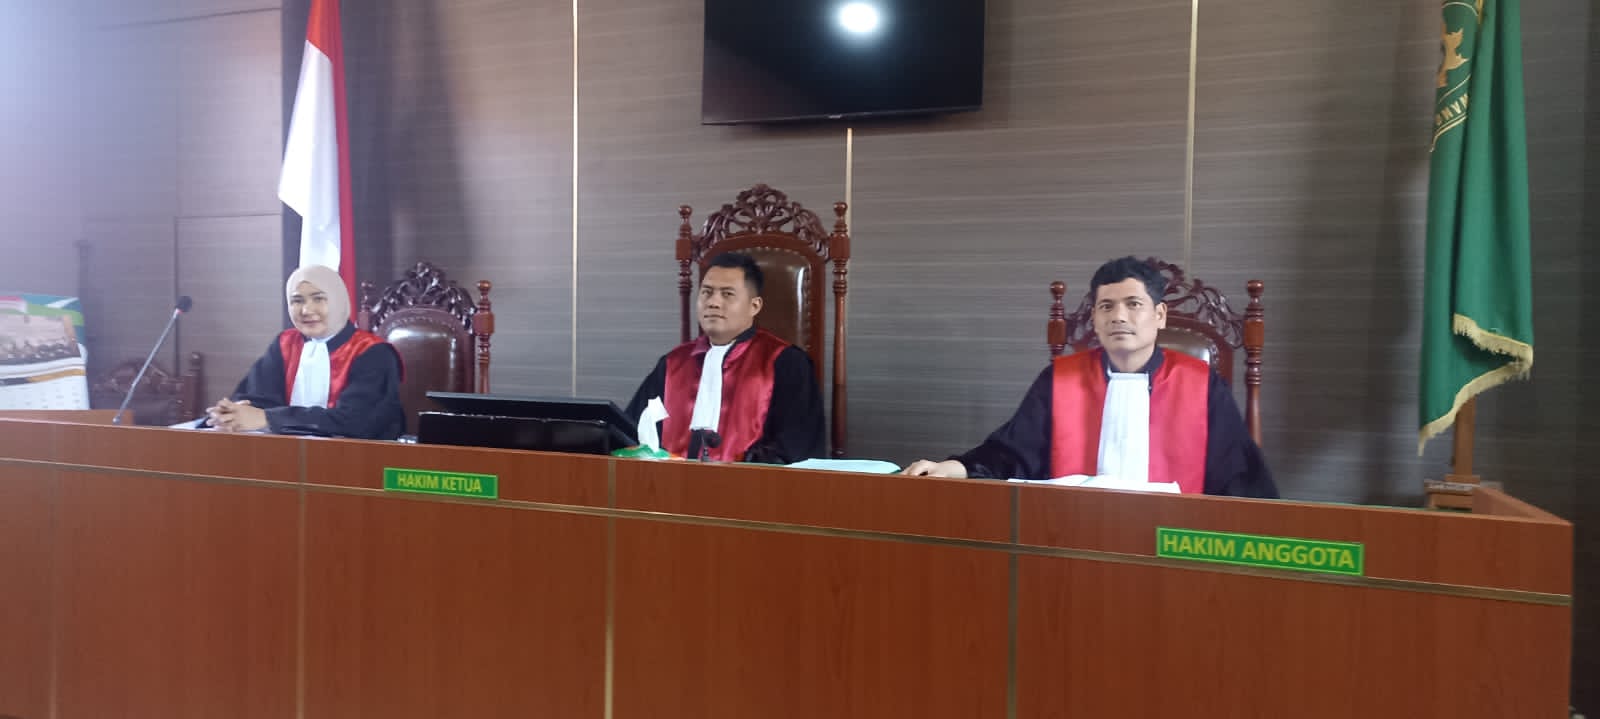 Tak Ada Ampun, Pengadilan Karawang Vonis Mati 4 Bandar Sabu dari Telukjambe, Bekasi dan Jakarta